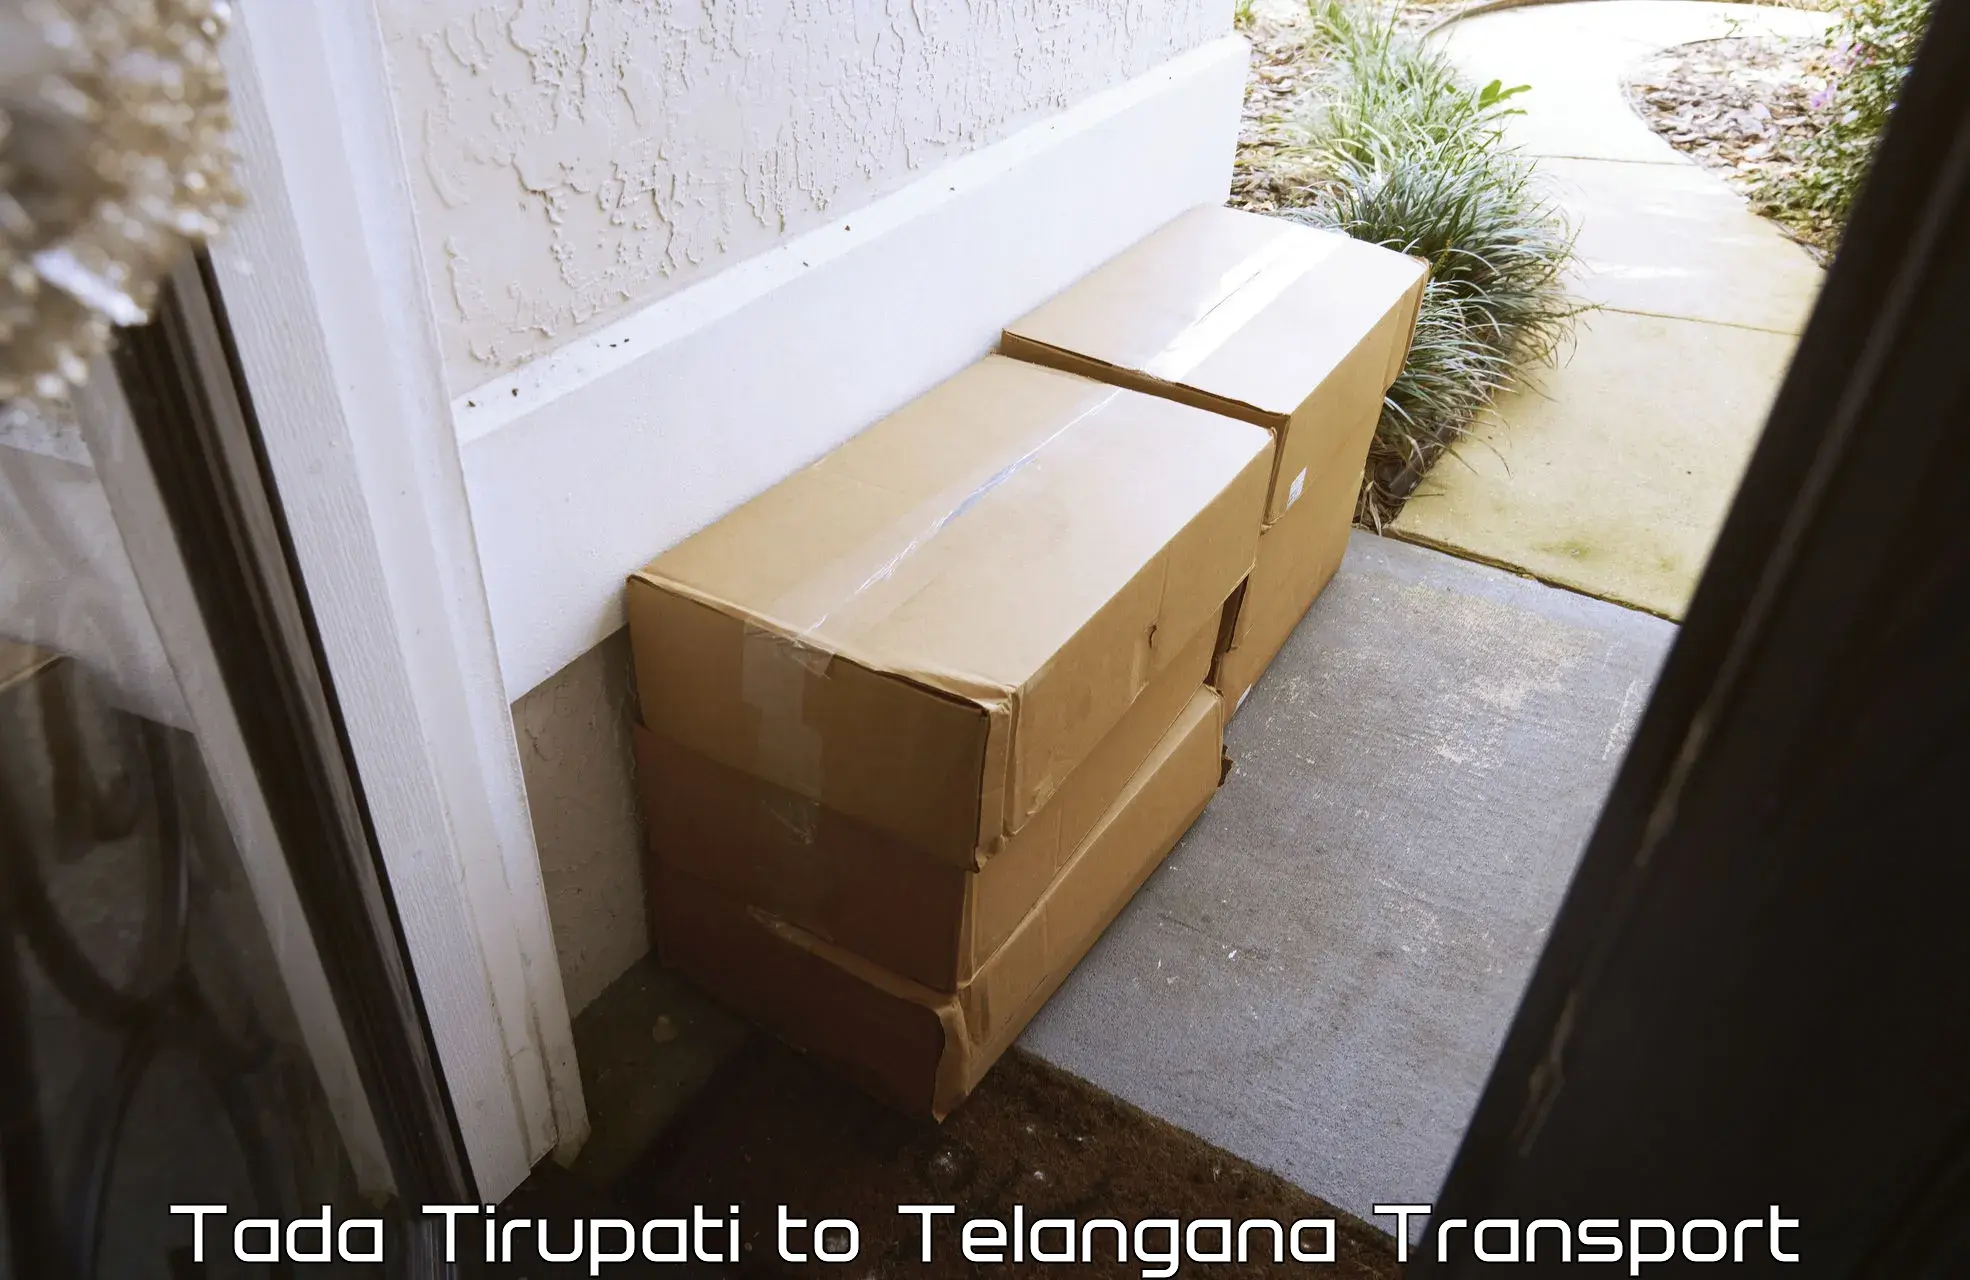 Delivery service Tada Tirupati to Dahegaon